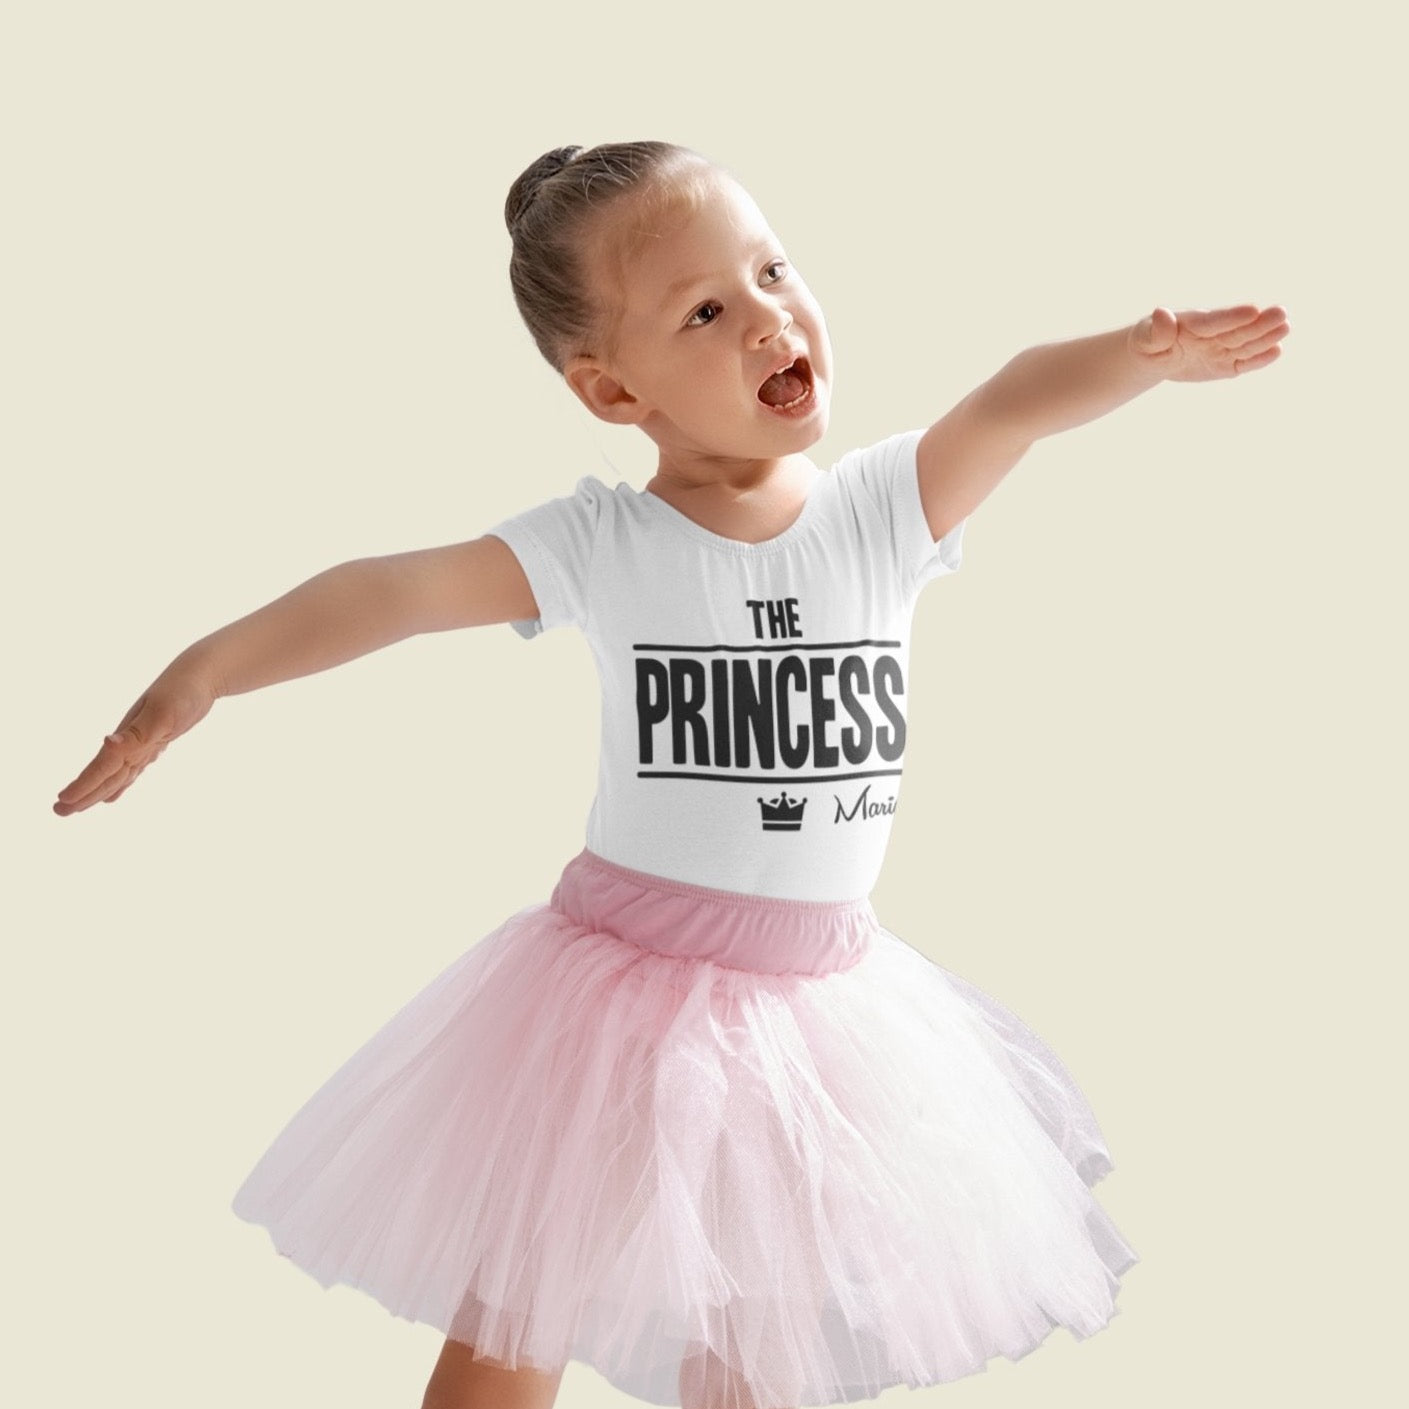 princess shirt mit name bedrucken lassen weiss